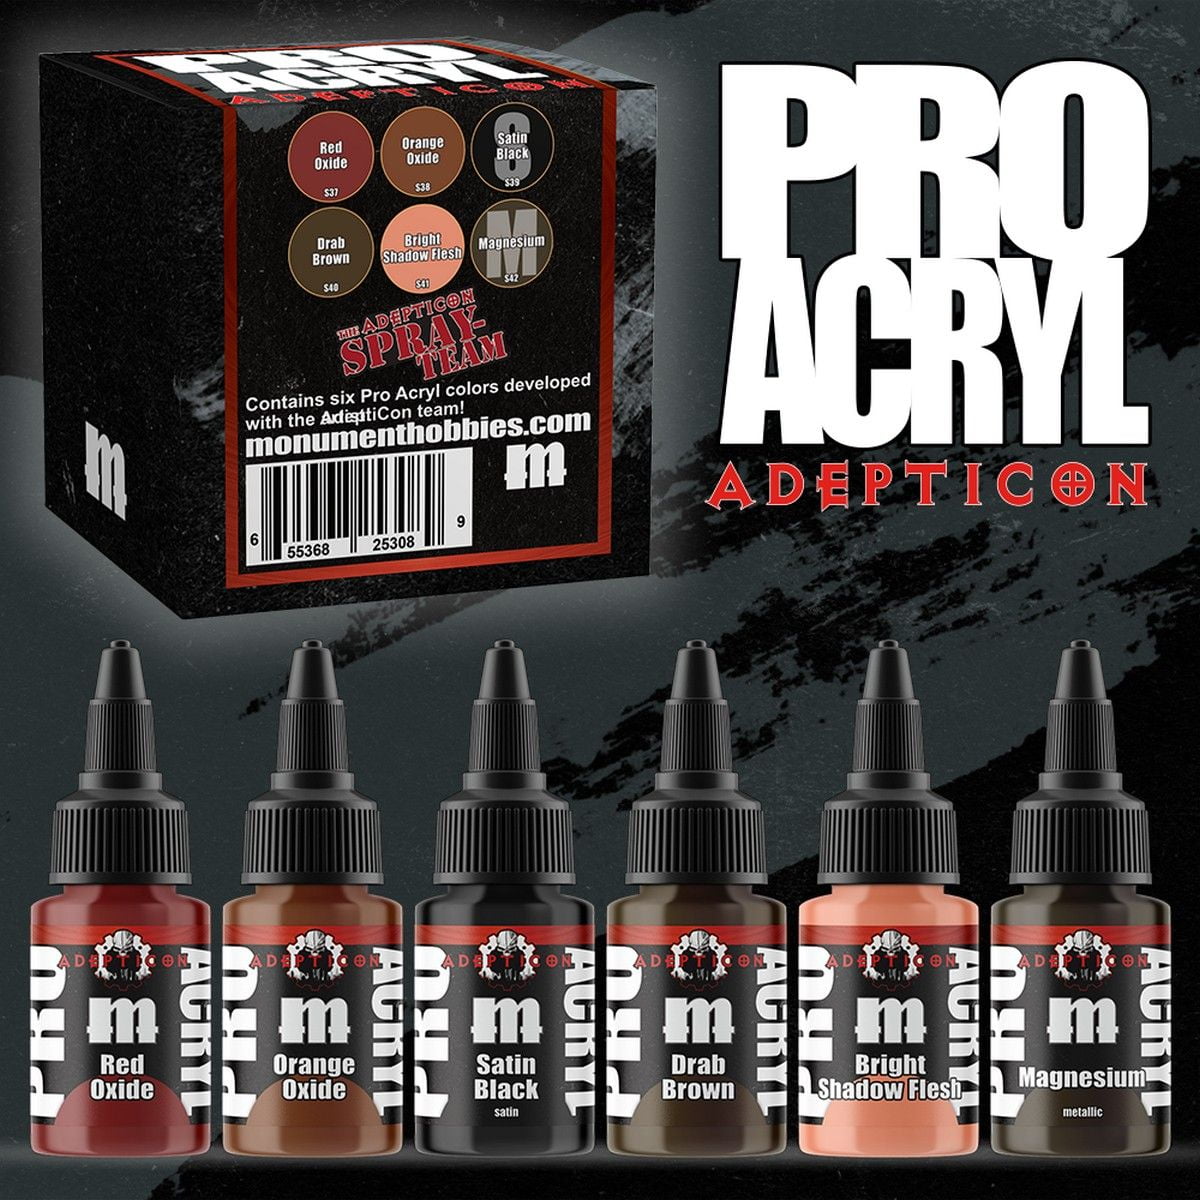 Pro Acryl Signature - Adepticon Spray Team Signature Set - 6 Colors